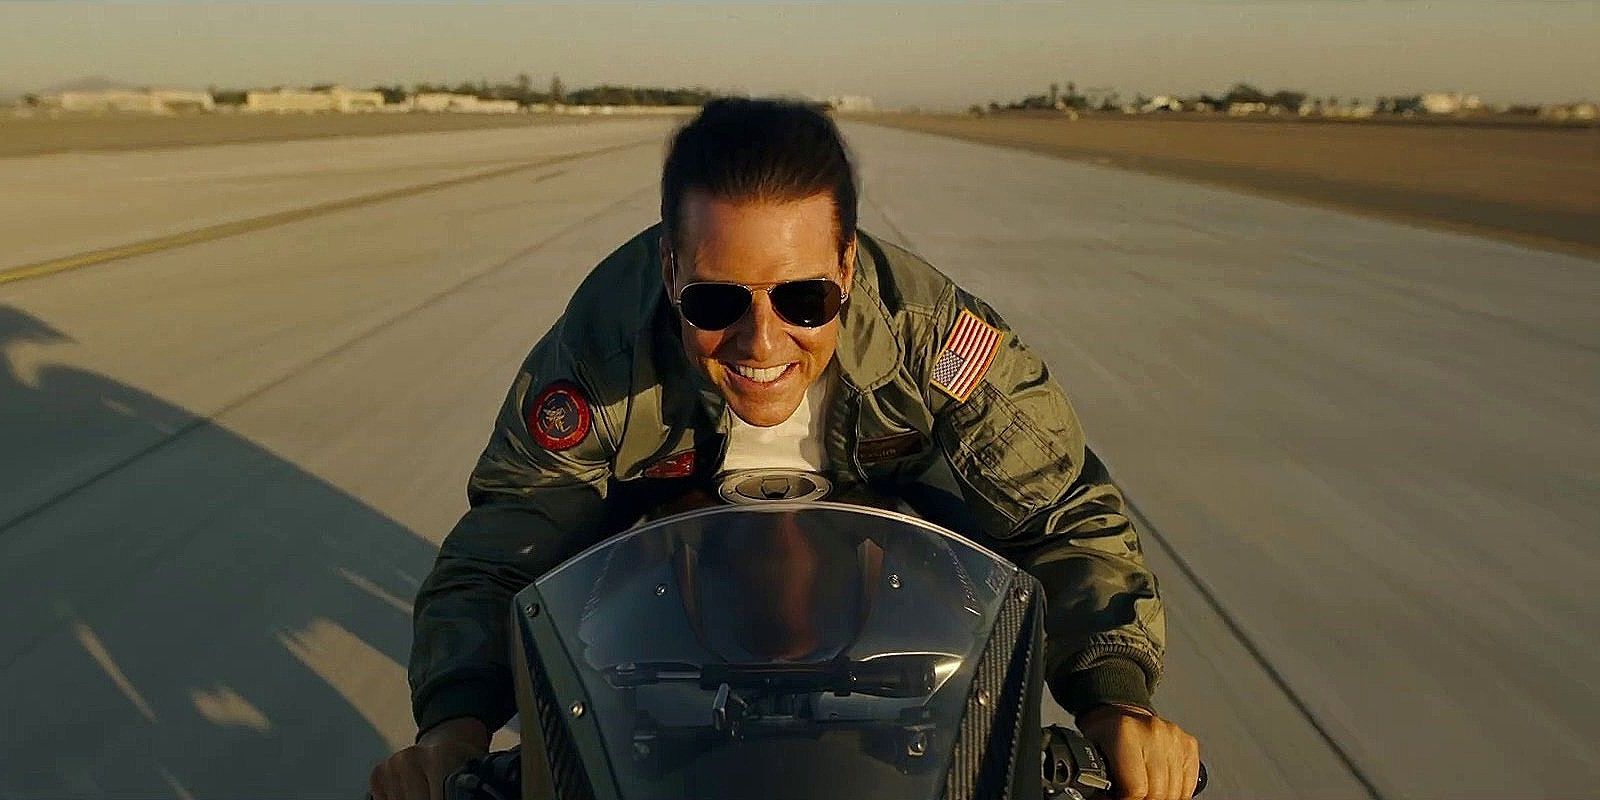 Tom Cruise riding a motorcycle in Top Gun Maverick